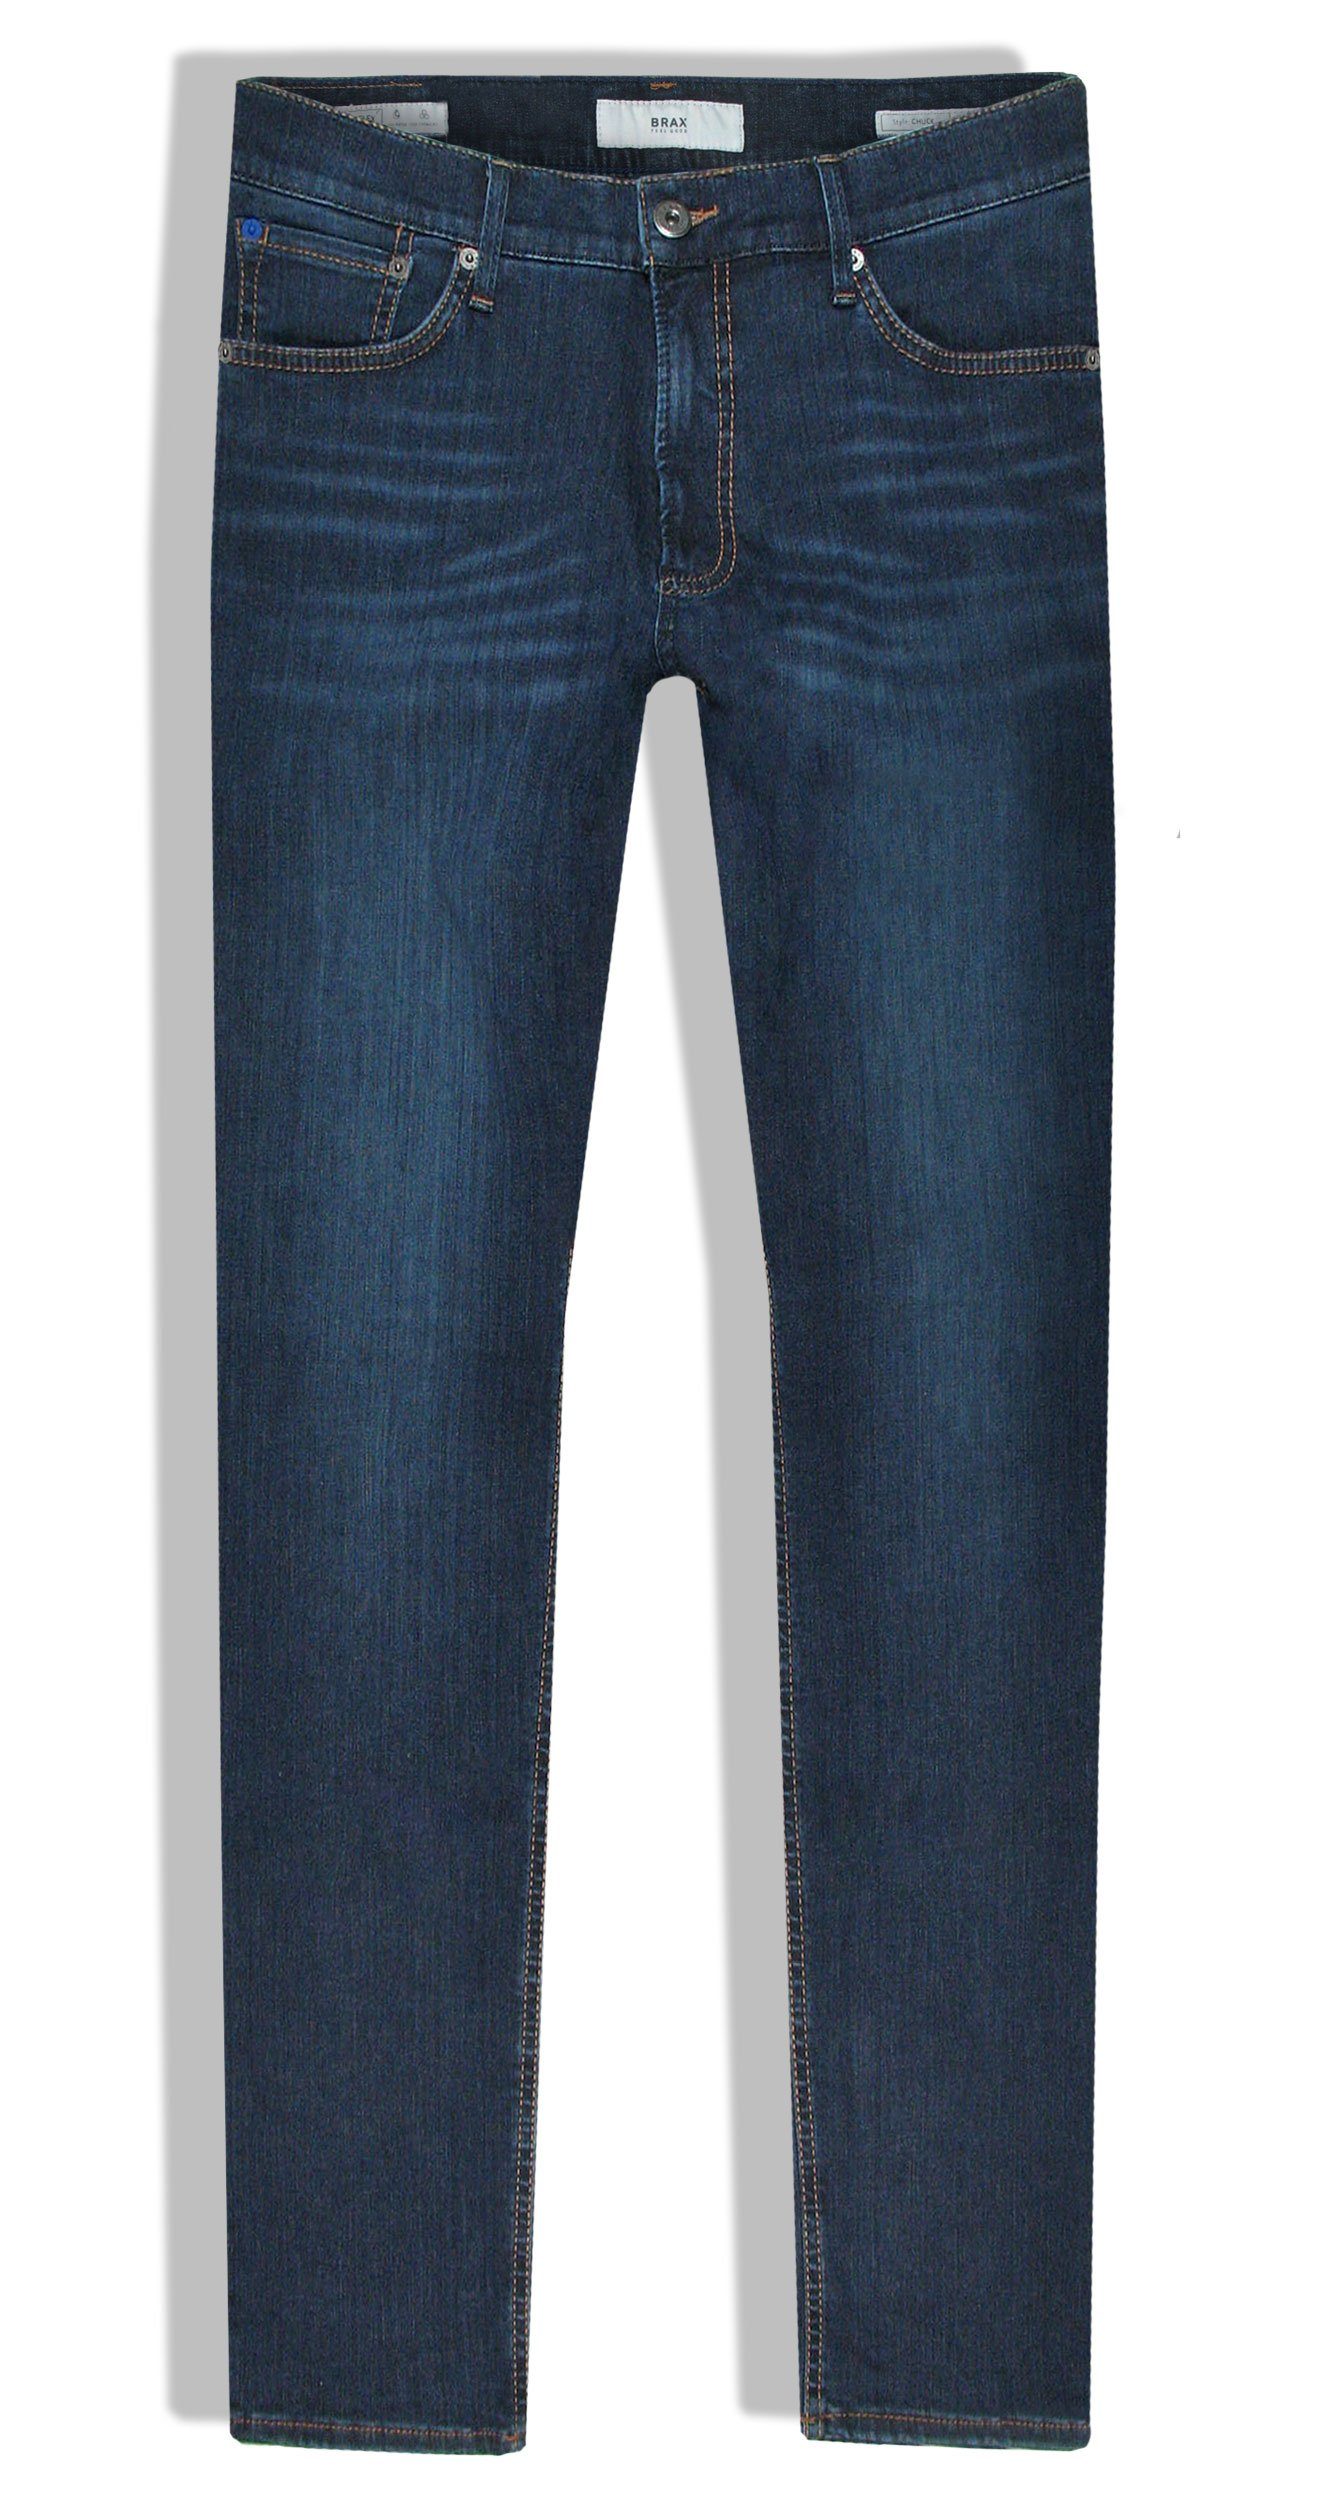 Style CHUCK Hi-FLEX Brax 5-Pocket-Jeans Denim